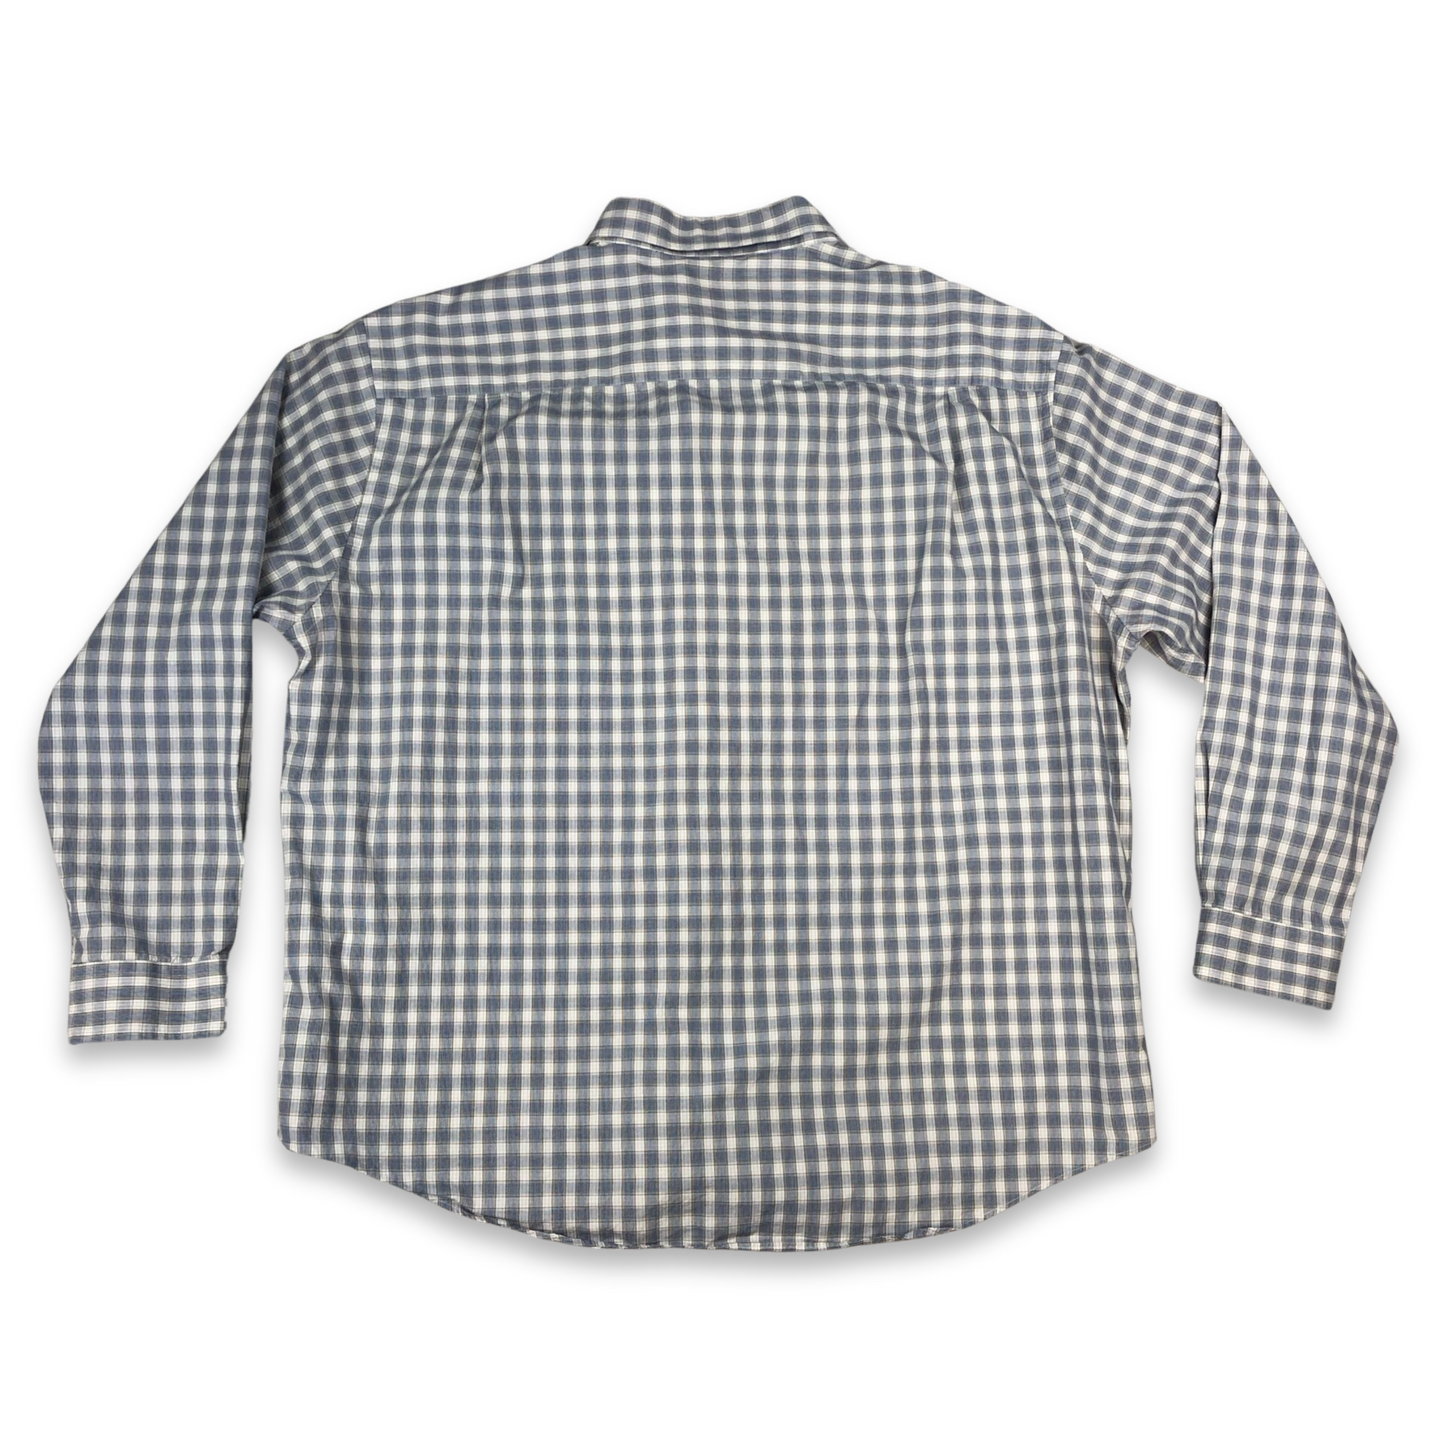 Vintage Nautica Blue and White Plaid Shirt Size 3XL